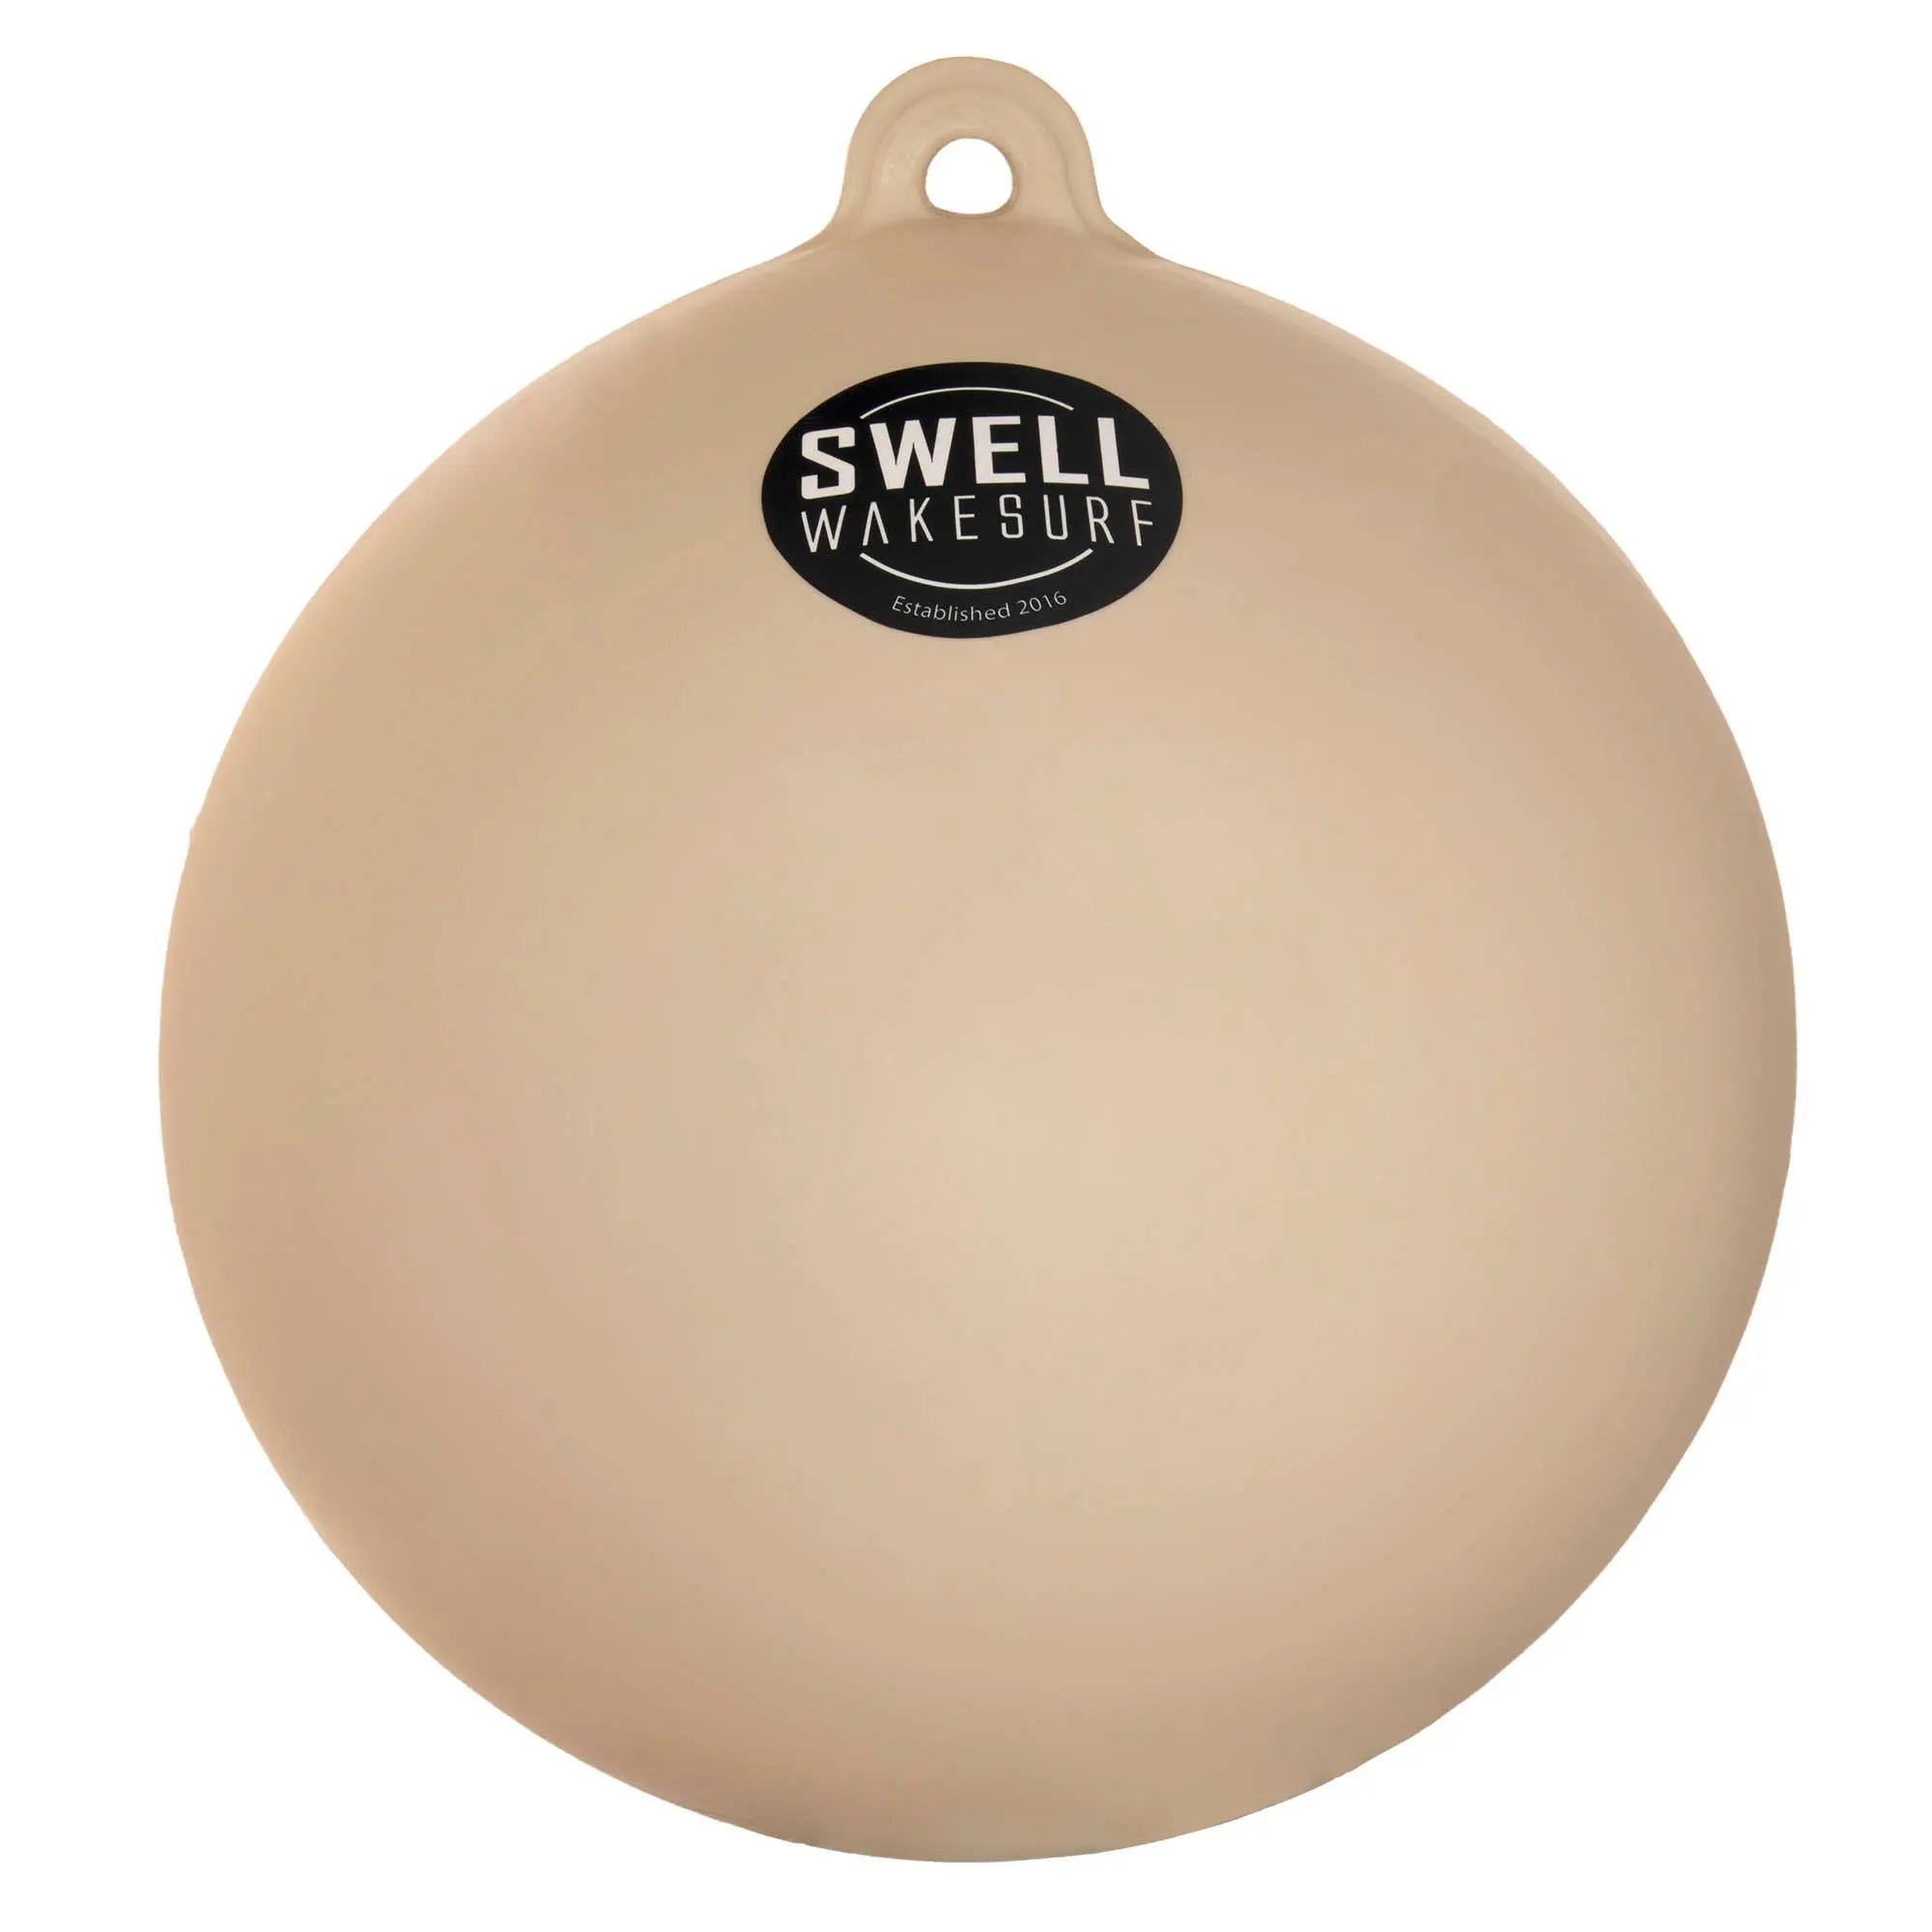 SWELL Wakesurf - Big Buoy Ball Inflatable Bumper Ball - Great For Tie-ups SWELL Wakesurf